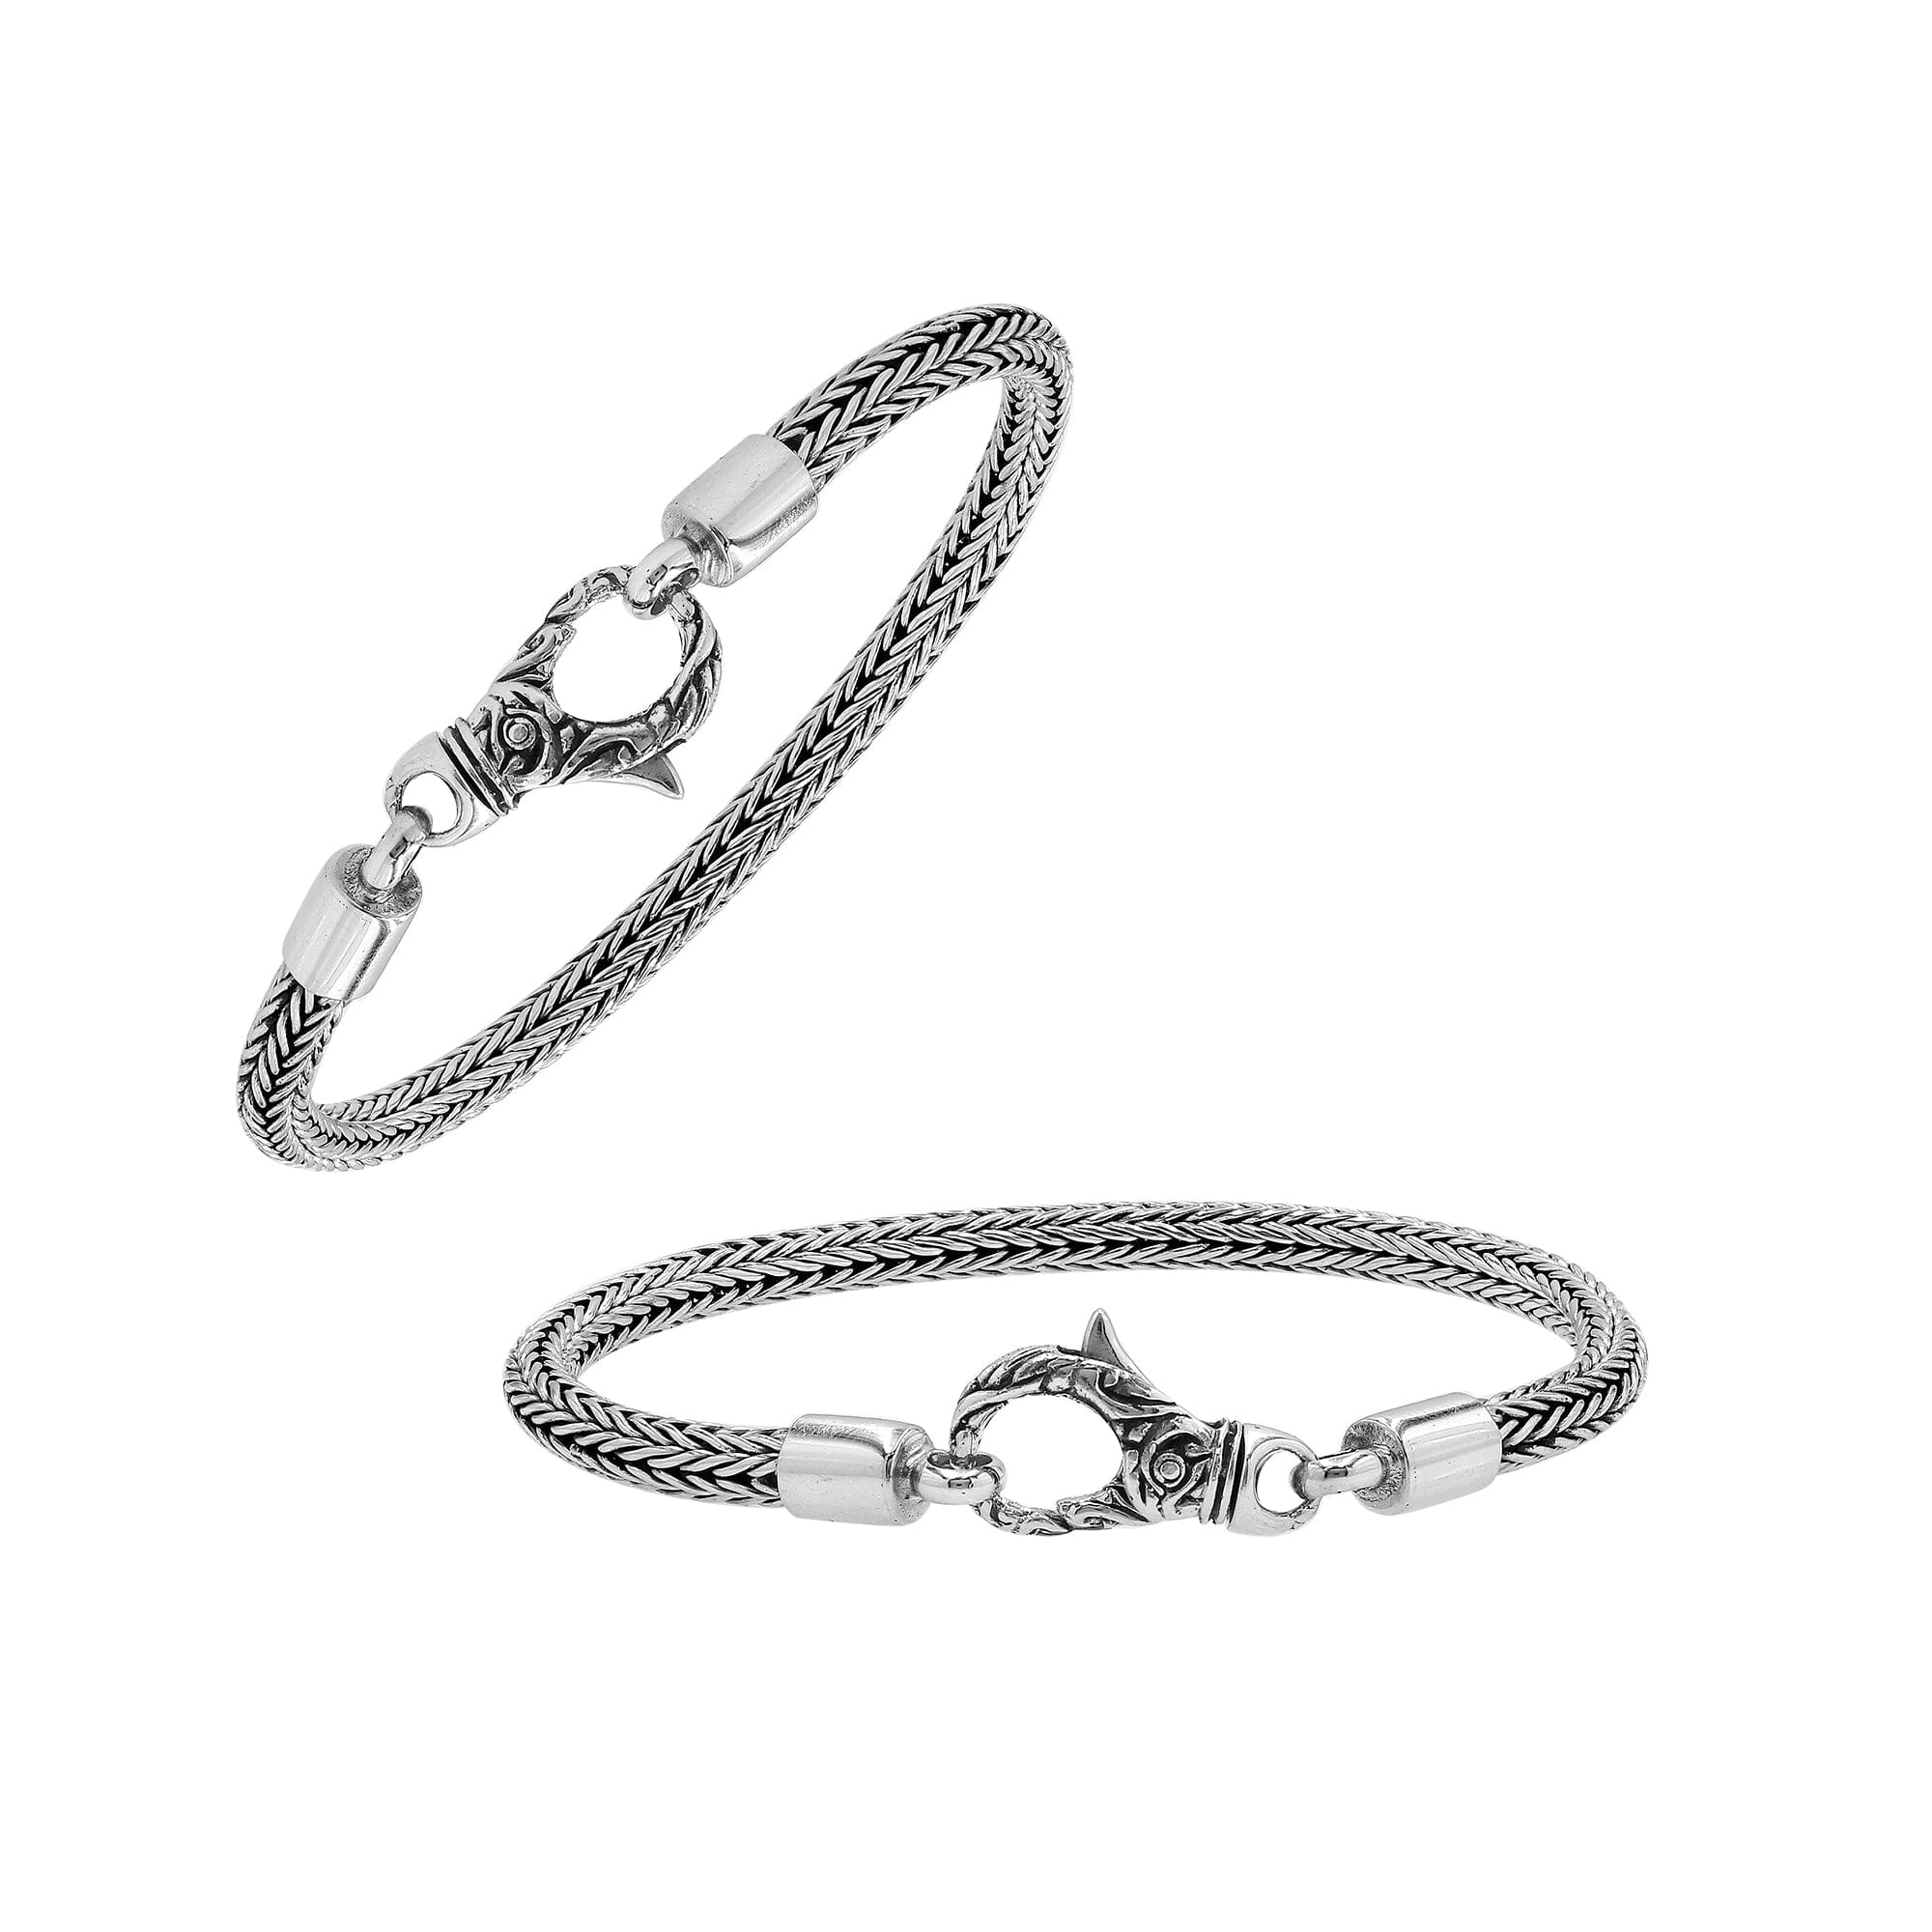 Buy Large Clear AB Crystal Bracelet, Stretch Bracelet, Wedding Jewelry,  Rectangle Statement Bracelet, Bracelets for Women Online in India - Etsy